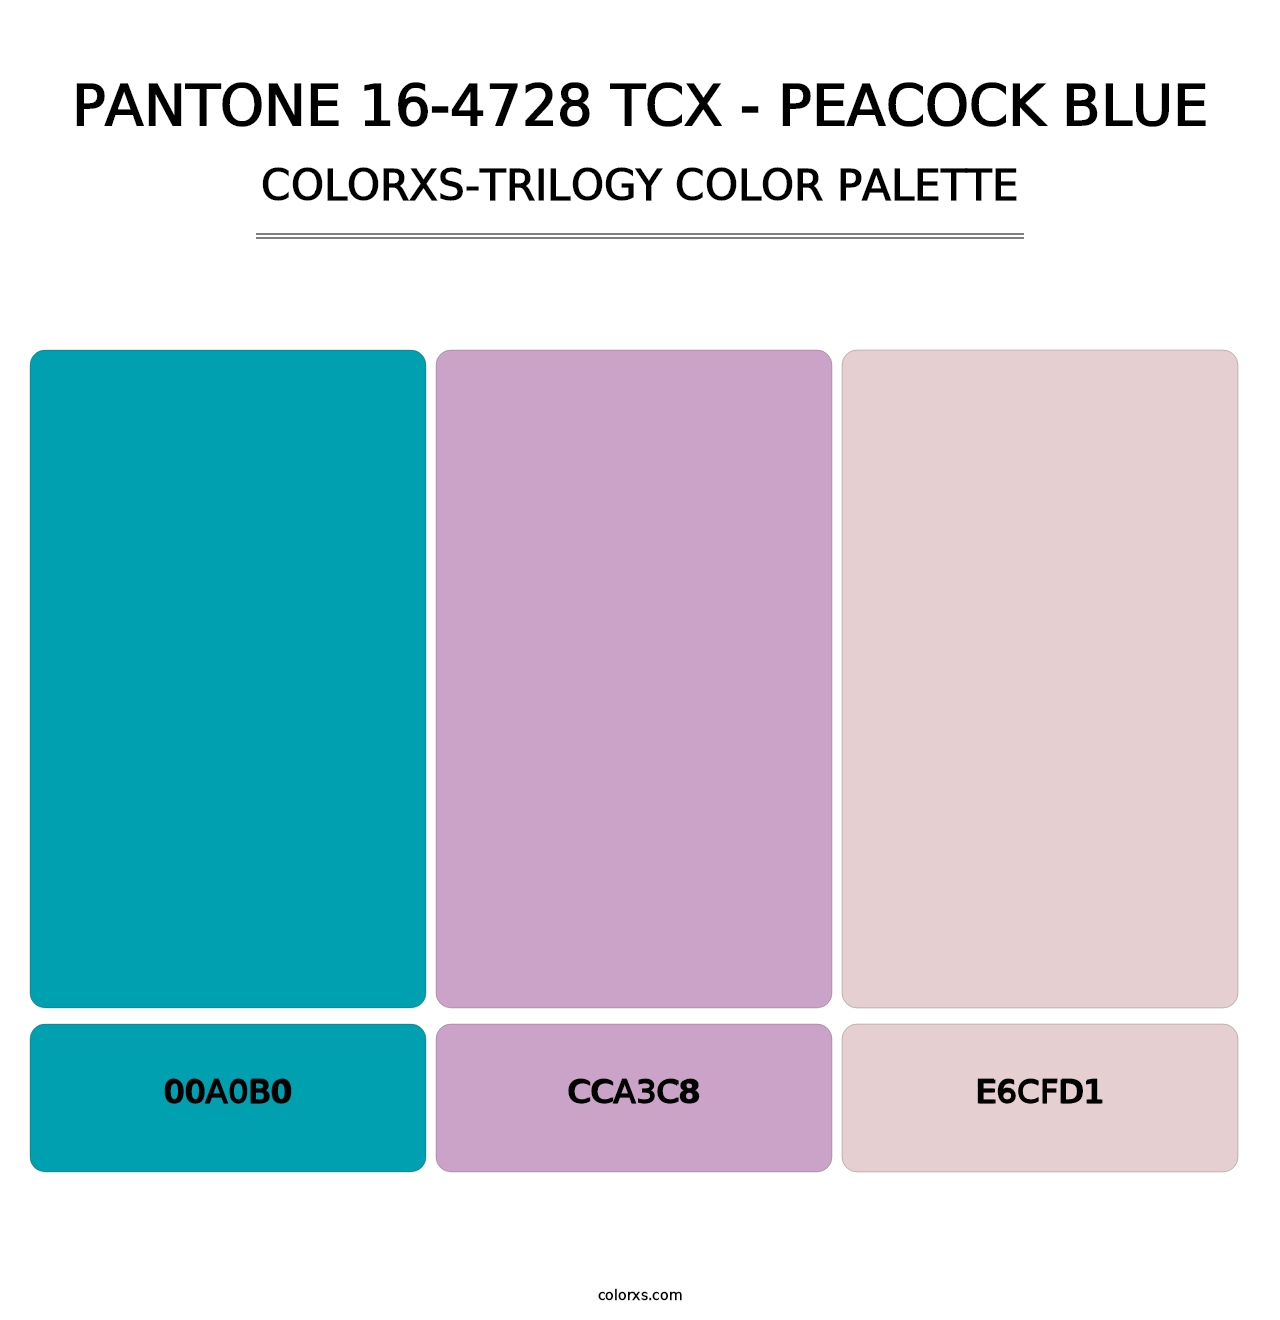 PANTONE 16-4728 TCX - Peacock Blue - Colorxs Trilogy Palette